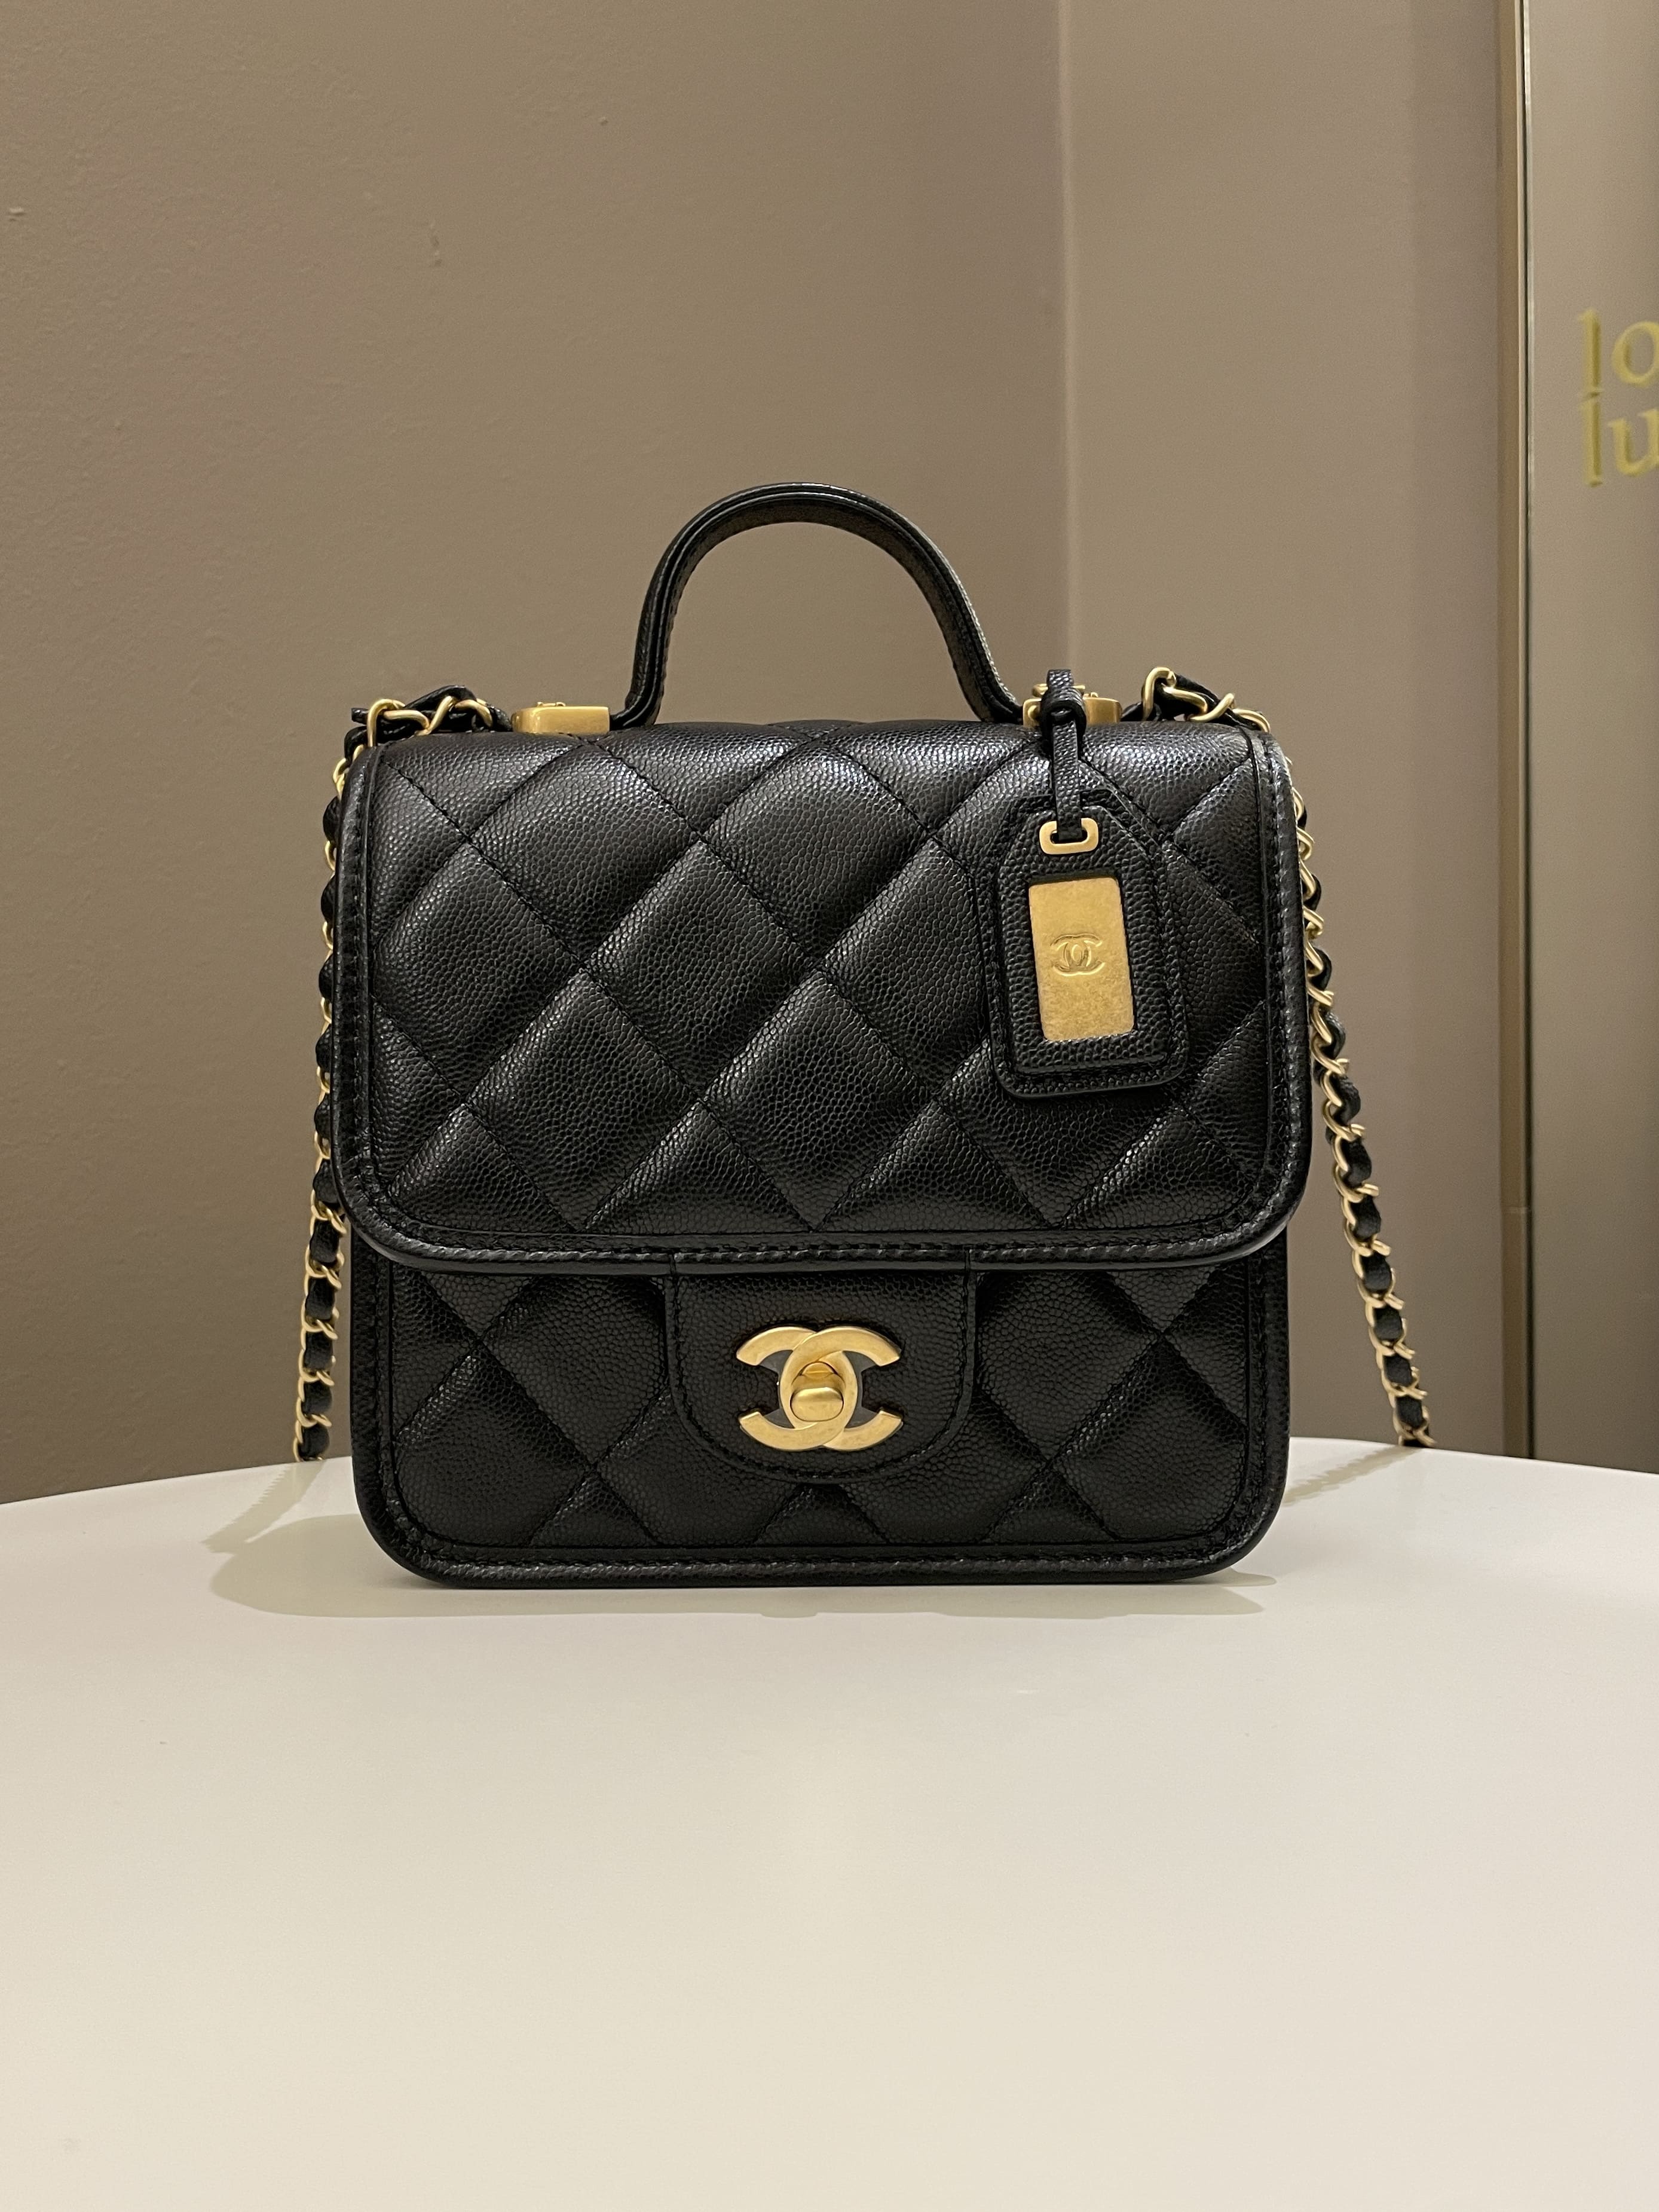 Chanel - Authenticated Handbag - Cloth Black Plain for Women, Very Good Condition